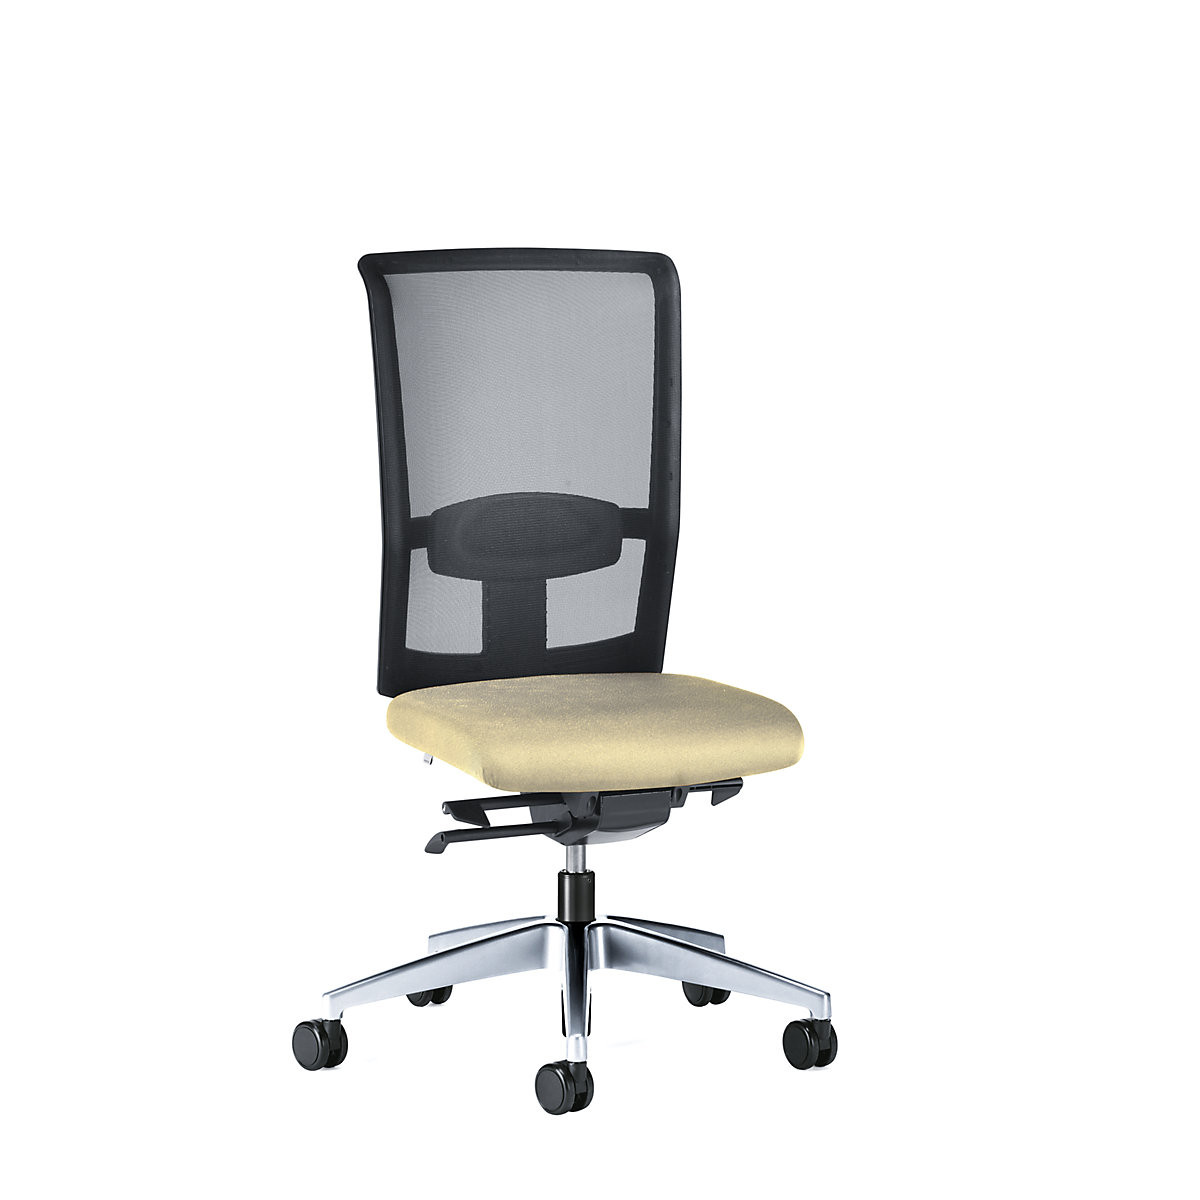 GOAL AIR office swivel chair, back rest height 545 mm – interstuhl, polished frame, with hard castors, beige, seat depth 410 mm-3